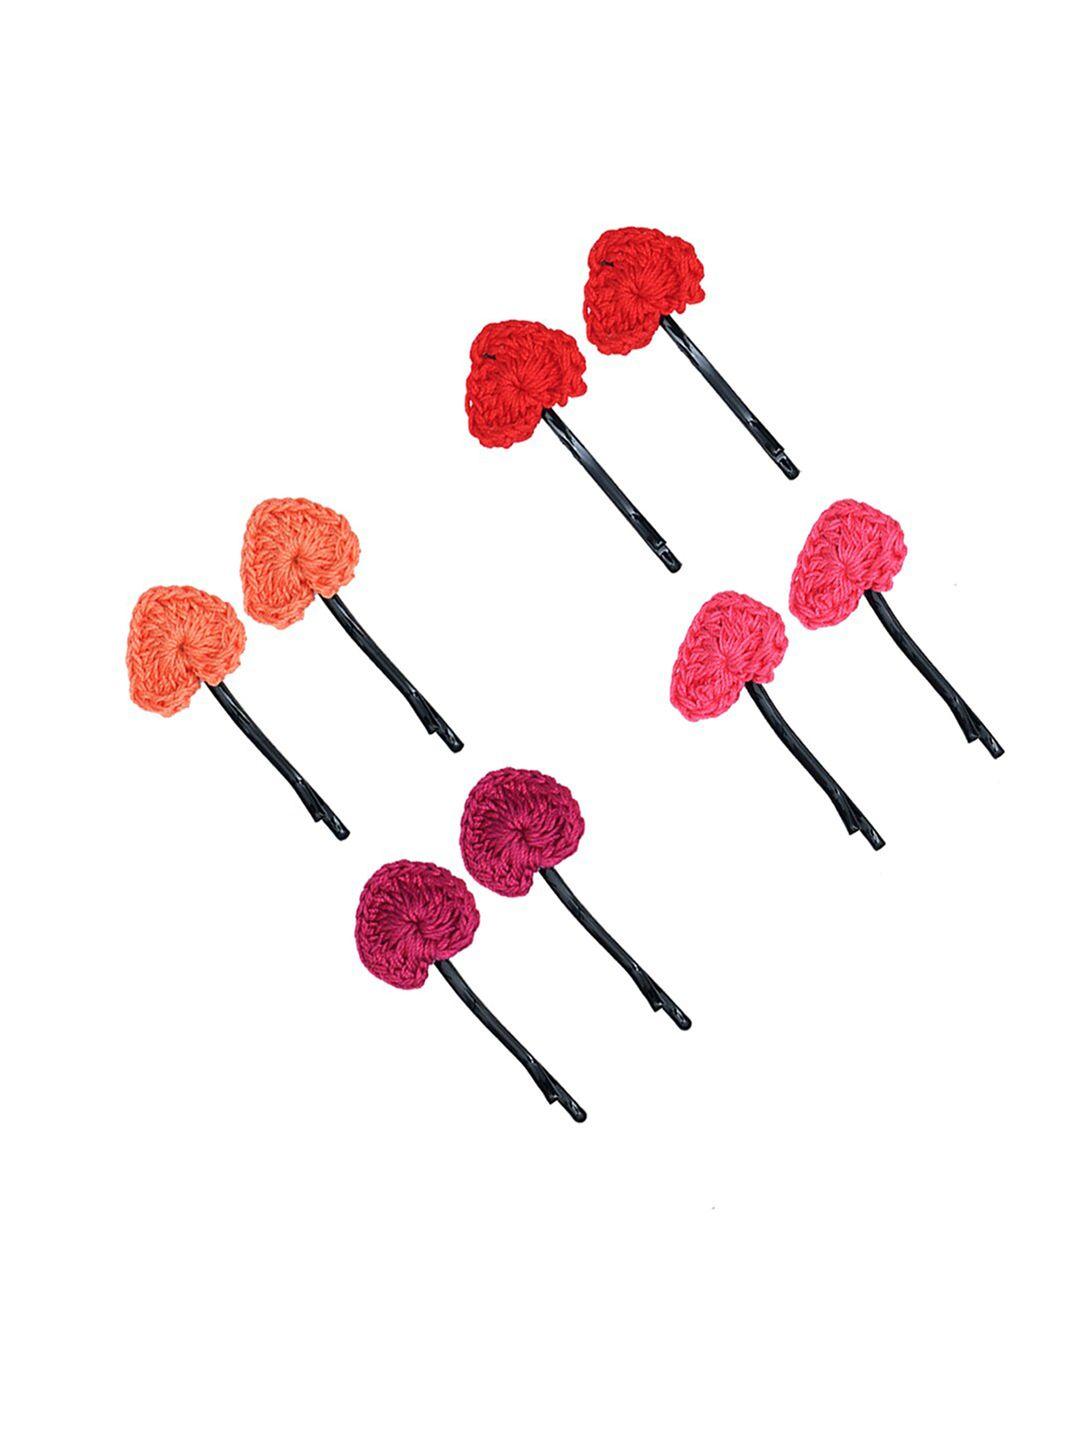 funkrafts girls heart multicolor hair pins set of 8